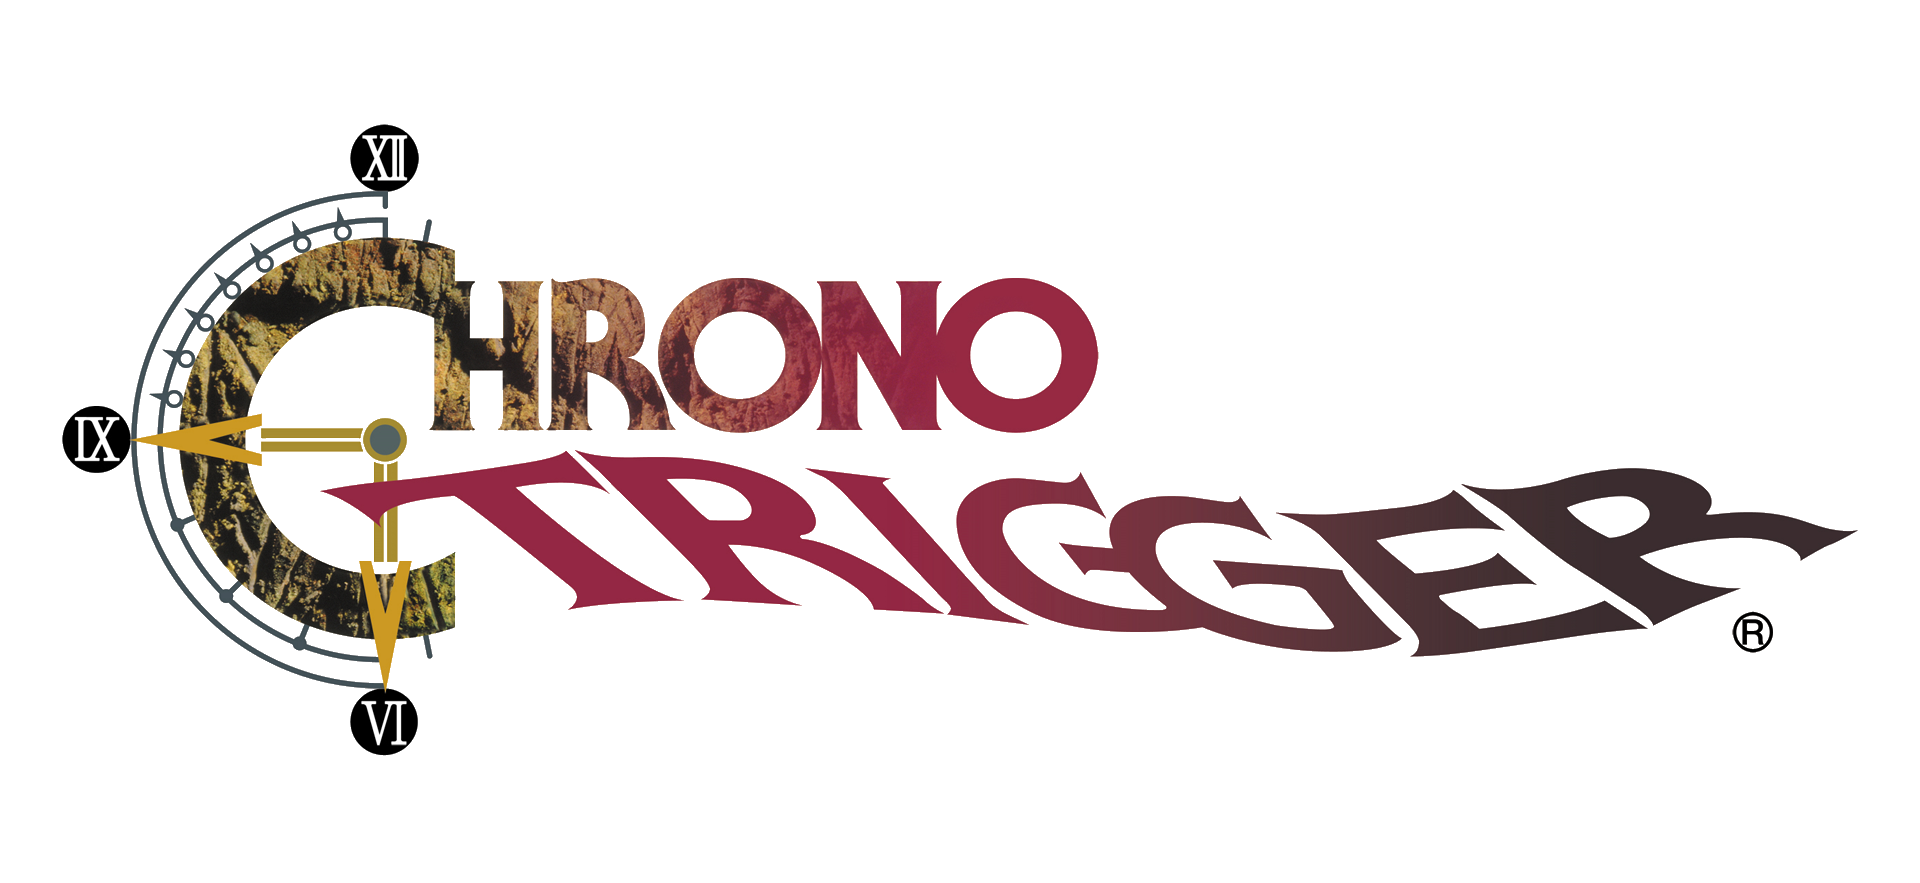 File:Chrono Trigger Frog.png